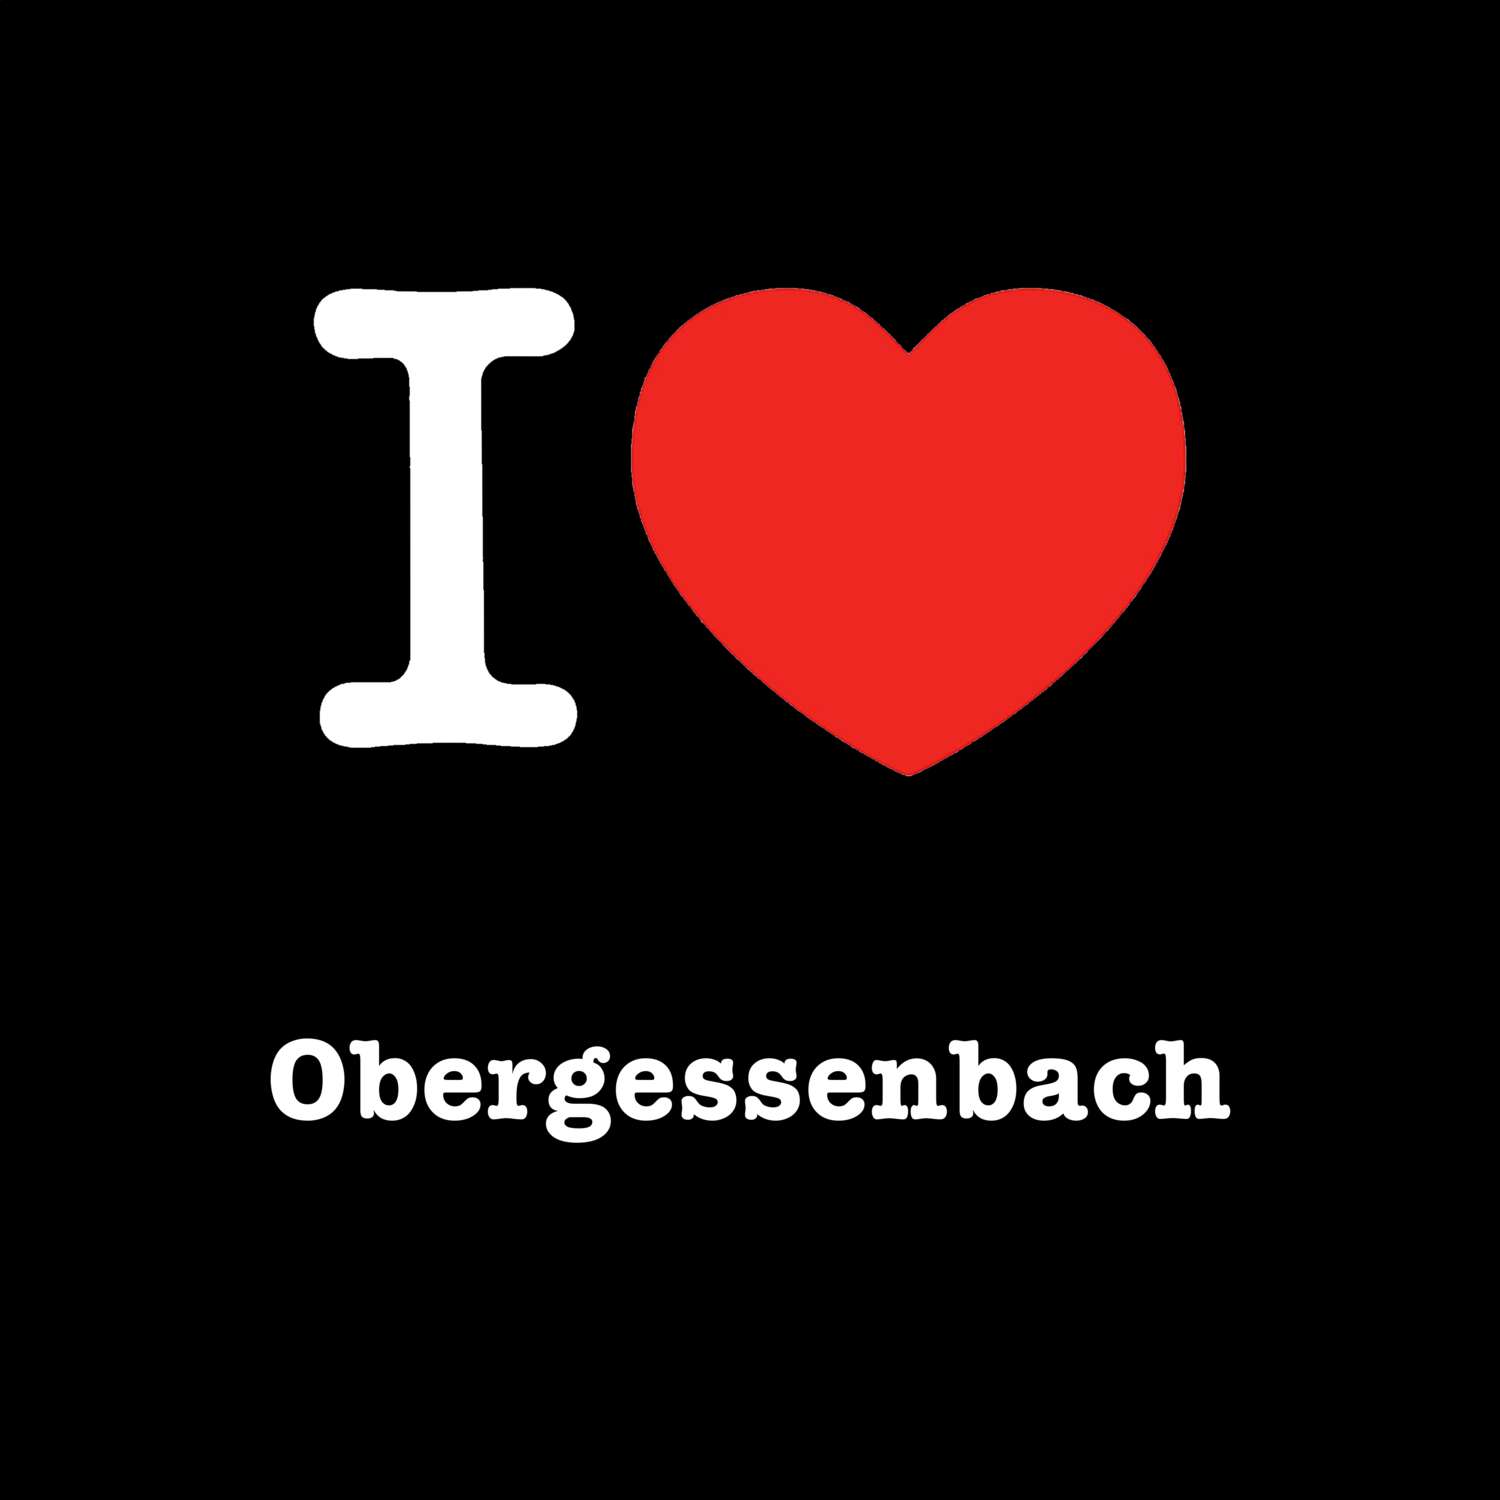 Obergessenbach T-Shirt »I love«